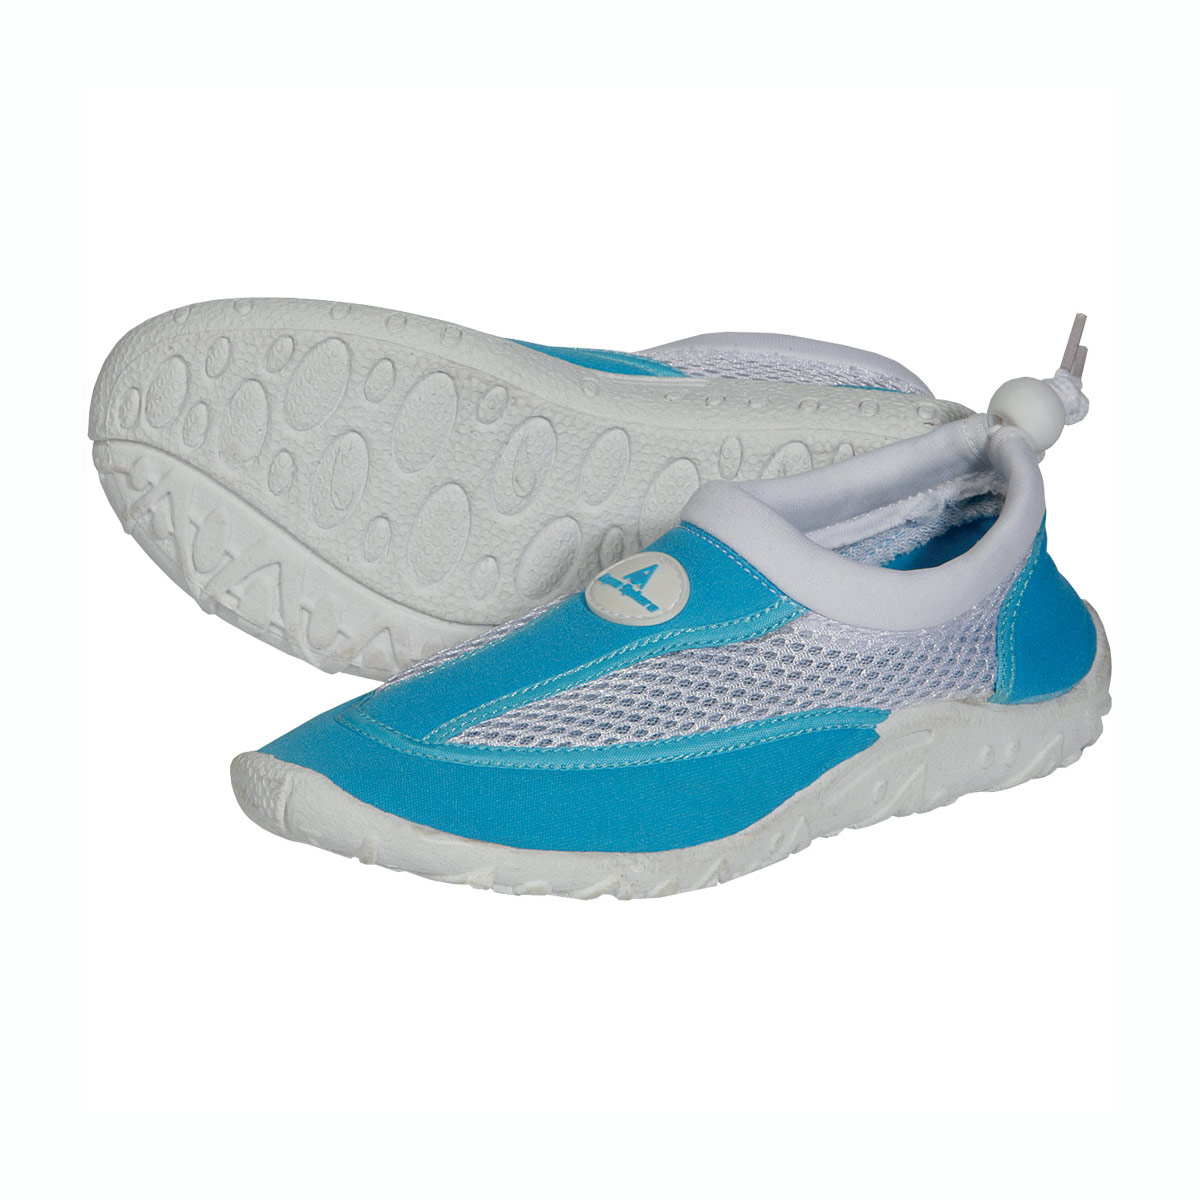 Aquasphere Junior Cancun Pool Shoes - Turquoise/White